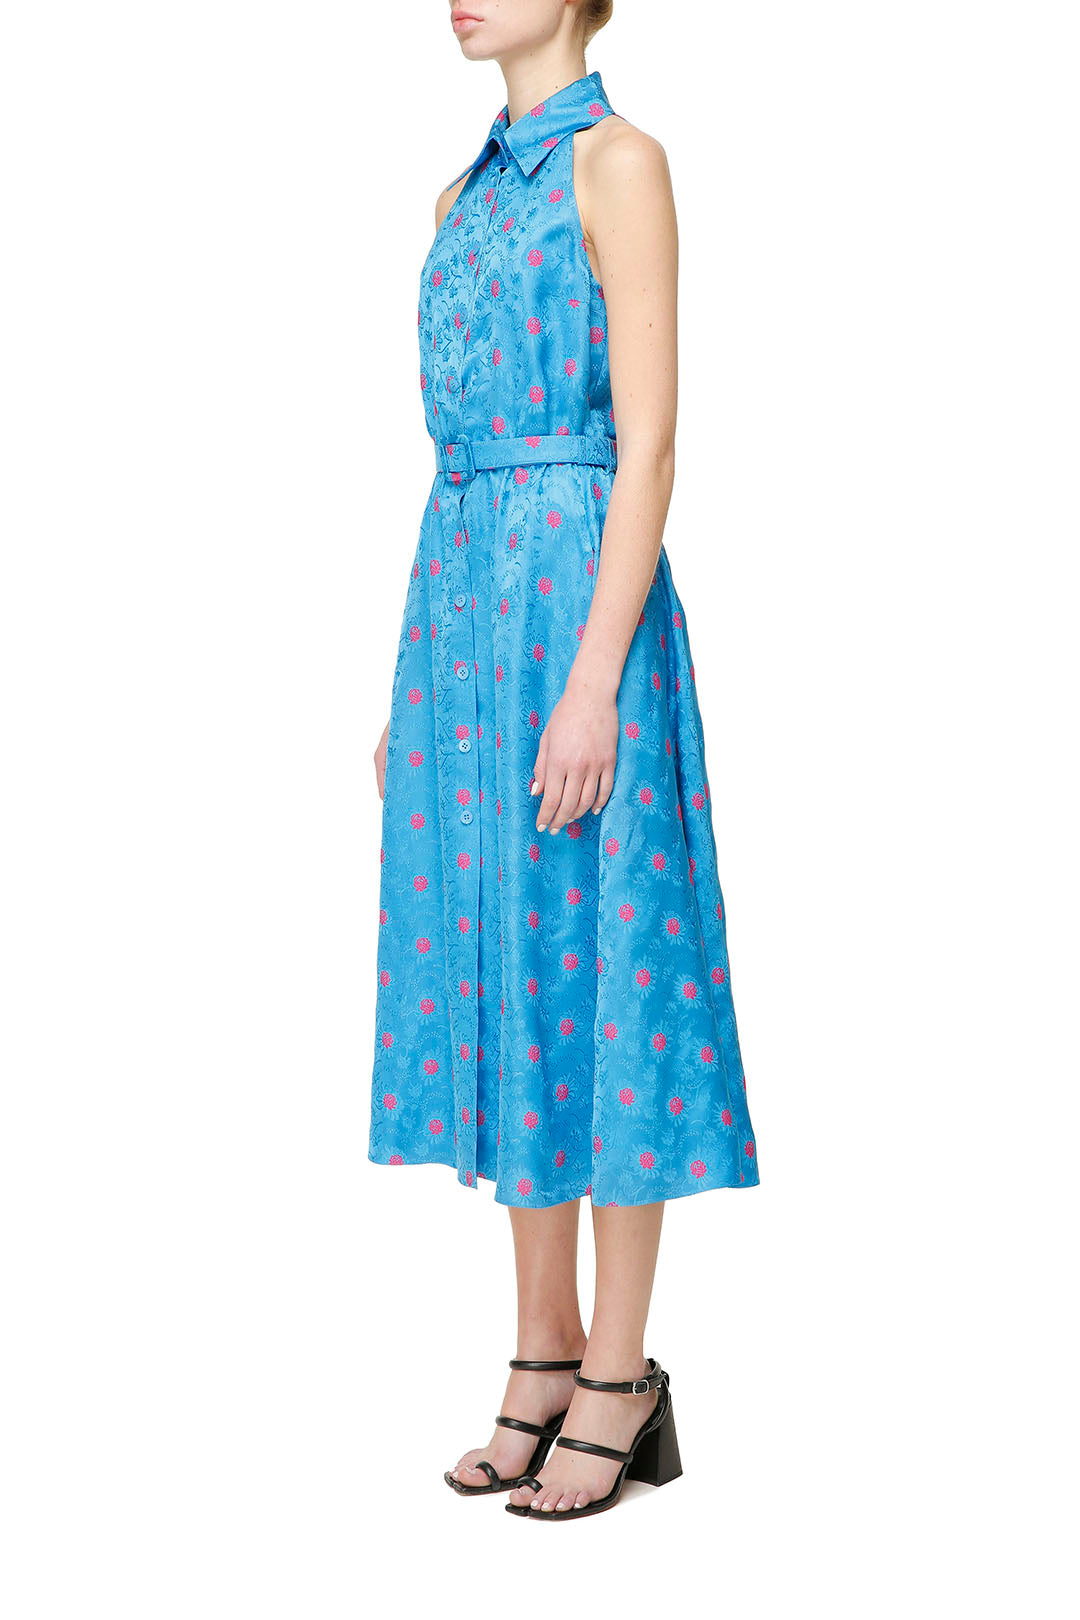 Turquoise jacquard dress